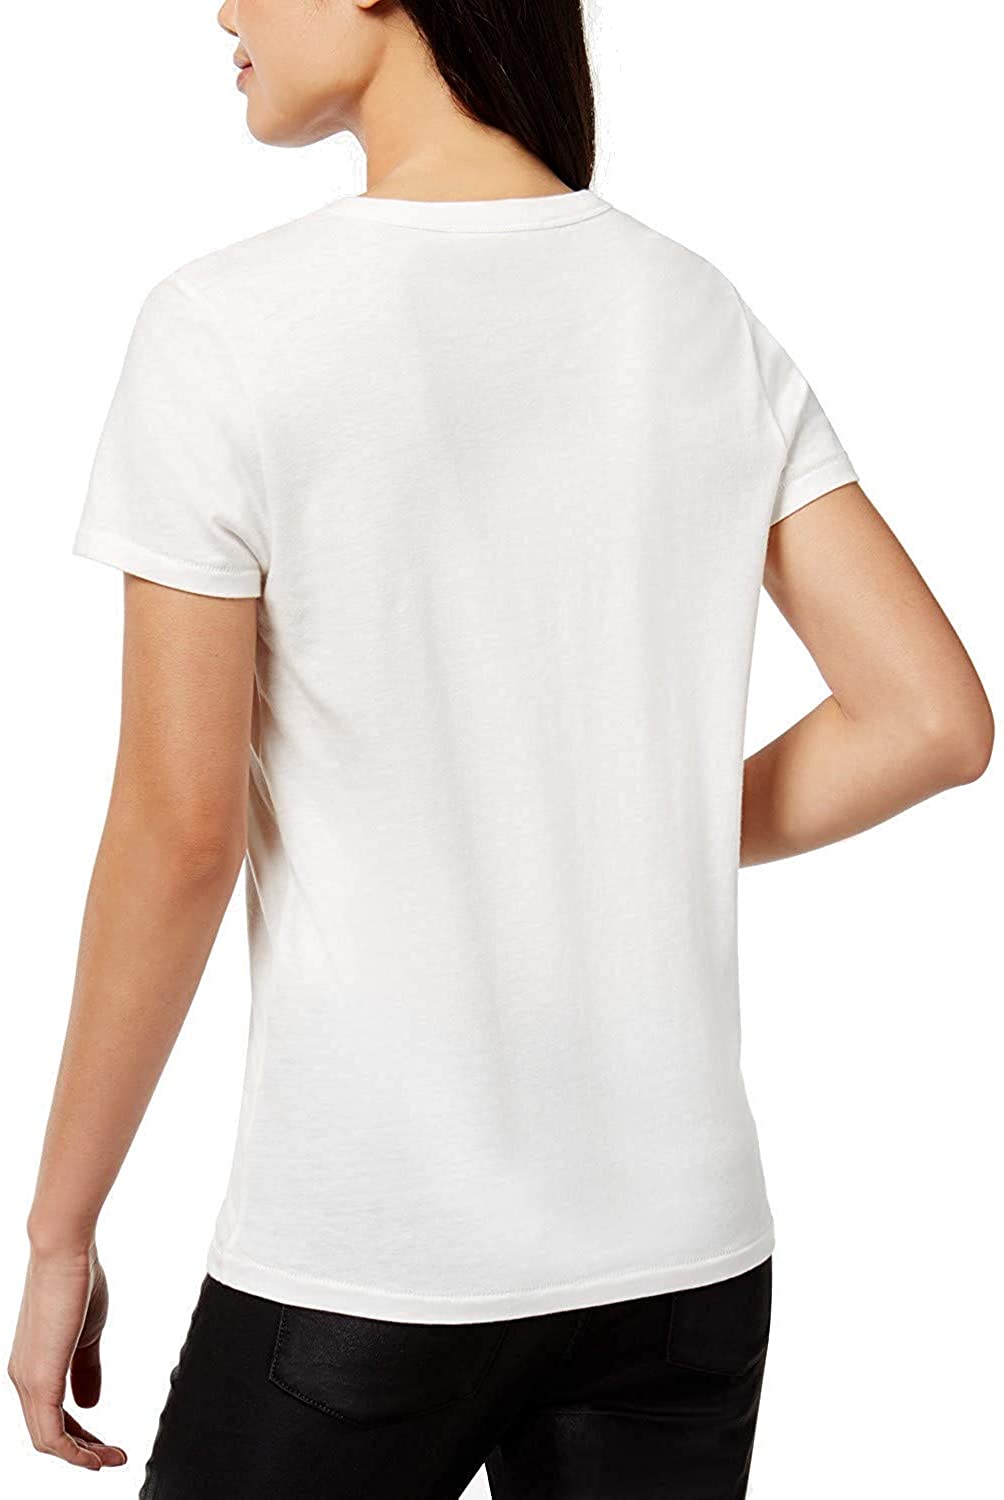 Bow & Drape Womens Sequin Graphic T-Shirt, White, Medium - image 2 of 2